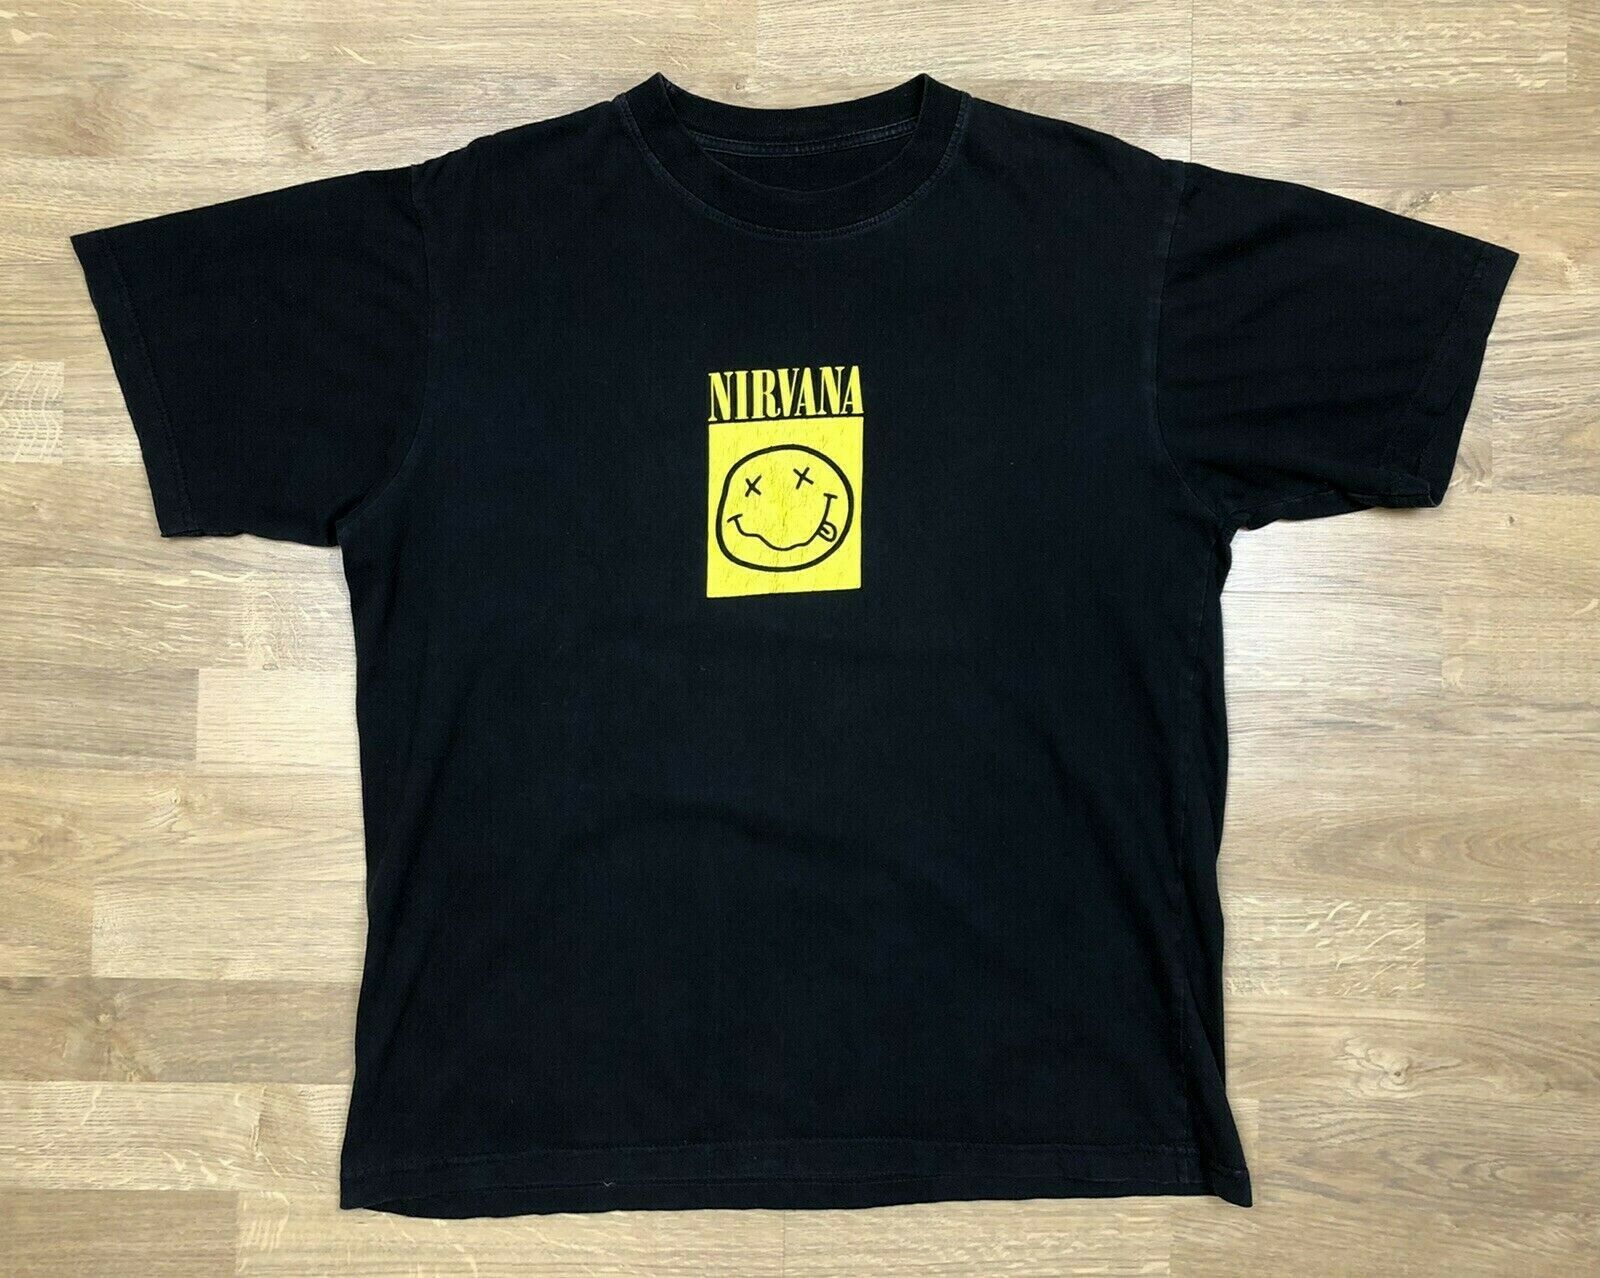 Vintage Nirvana Shirt Tee